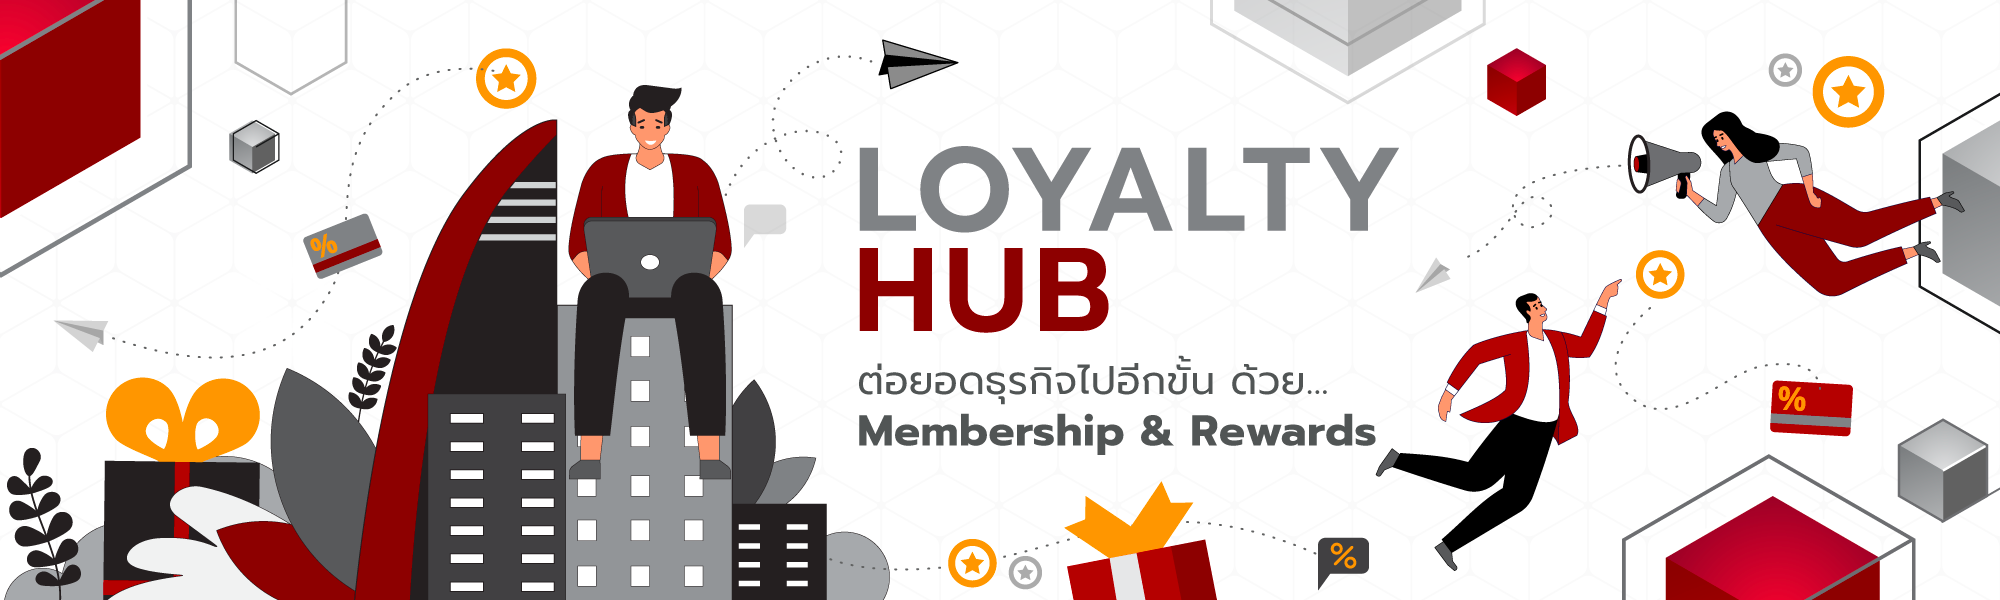 2-Web-Banner-Loyalty-Hub-2021